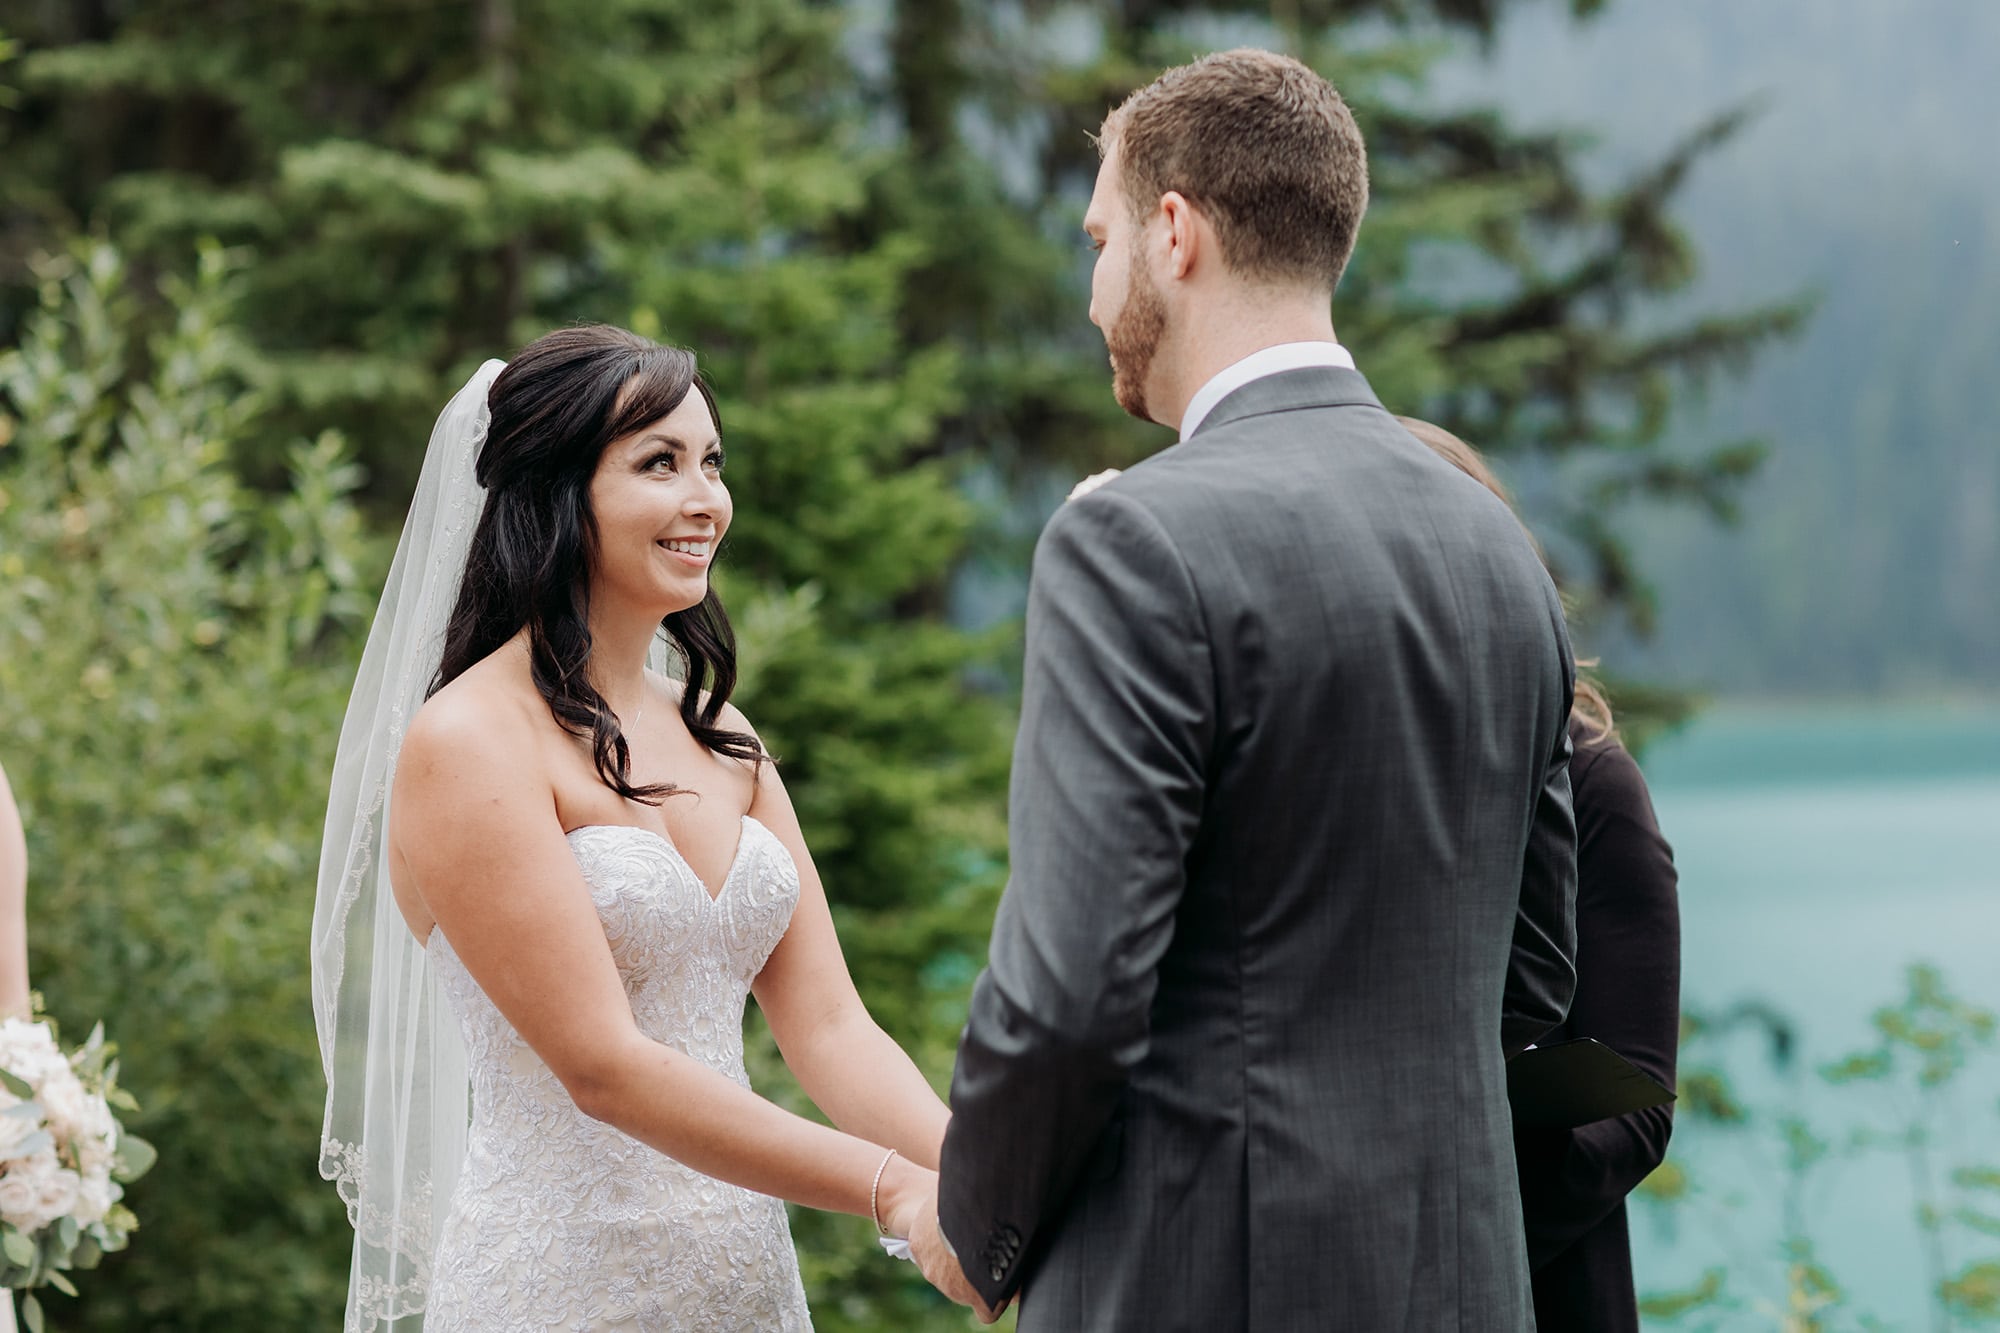 Emerald Lake Lodge Wedding Photos ceremony